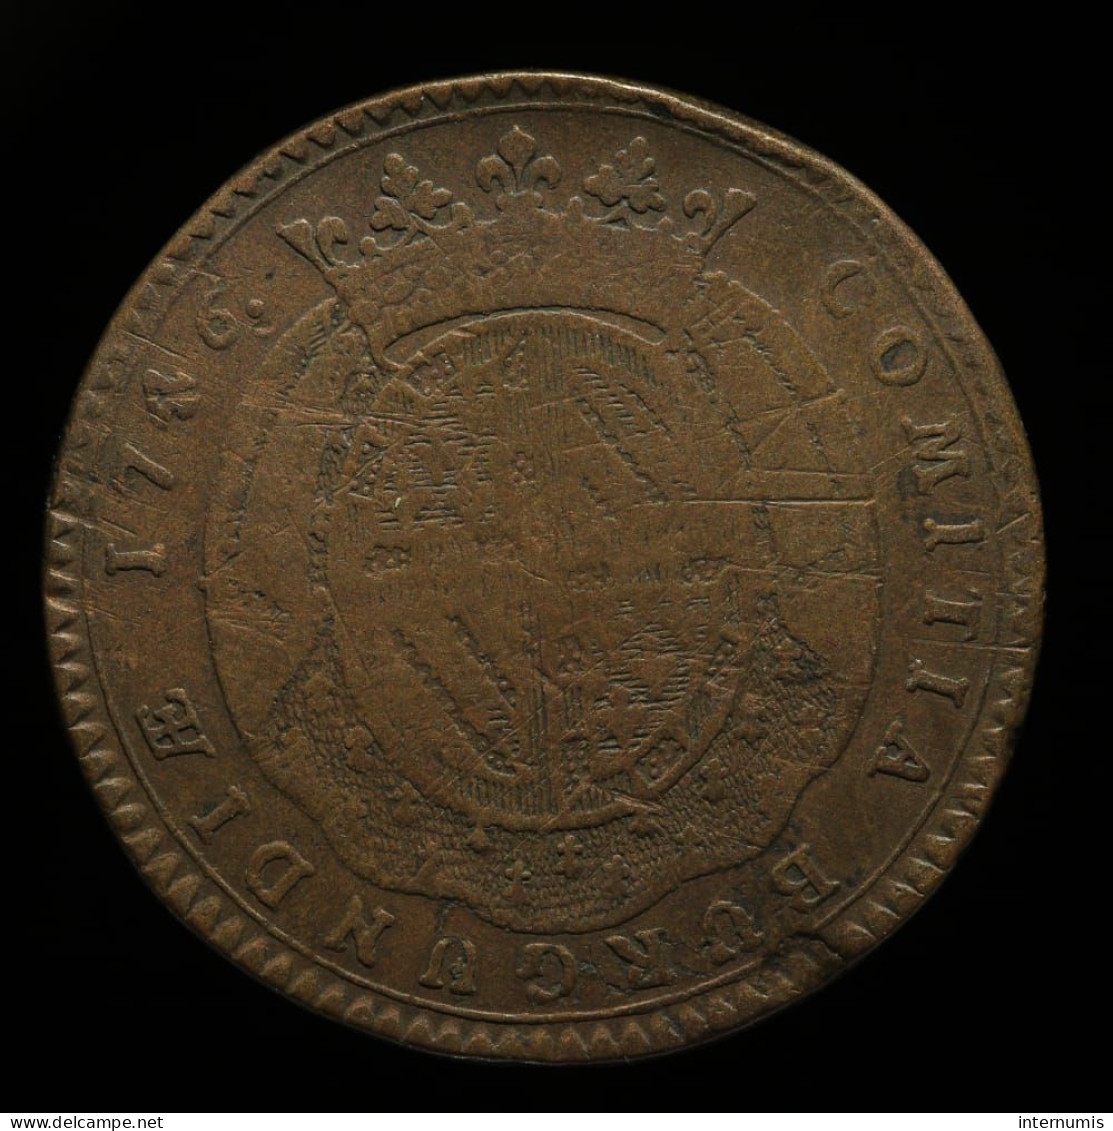 France, Louis XV, COMITIA BURGUNDIAE (Etats De Bourgogne), 1746, Cuivre (Copper), TB+ (VF), Feu#9849 - Monarchia / Nobiltà